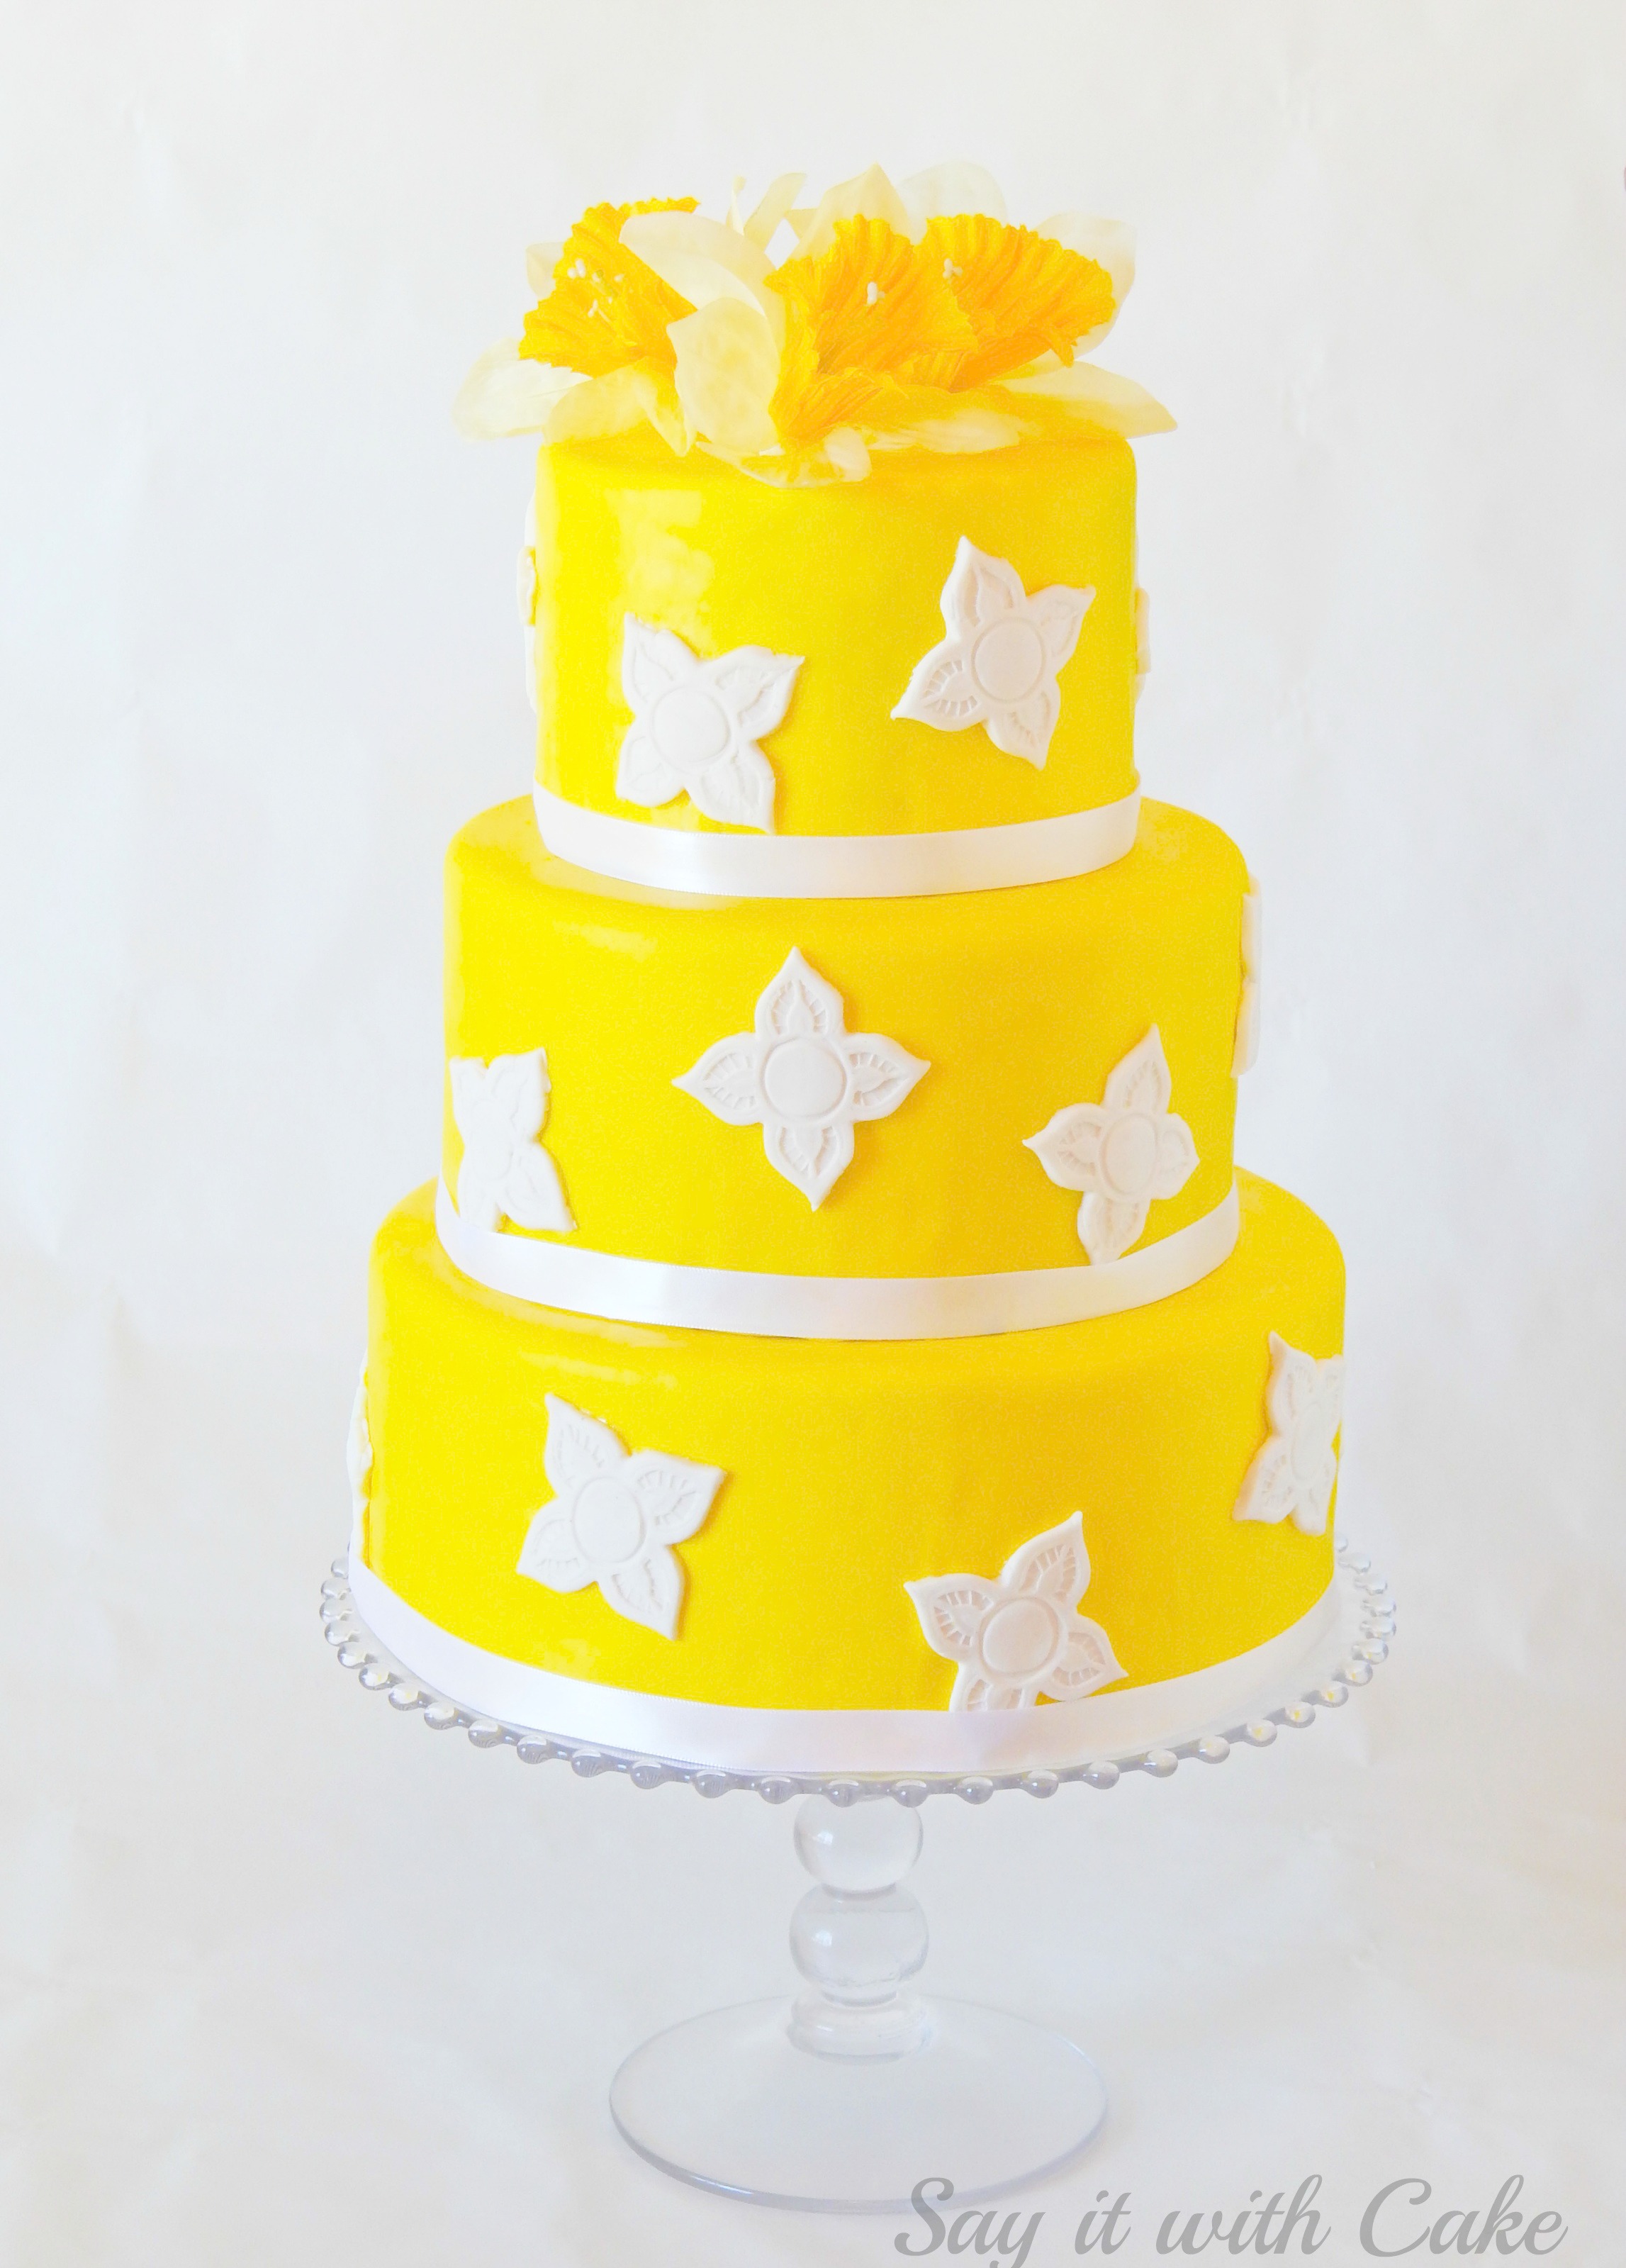 Birthday Cake with Yellow Flowers